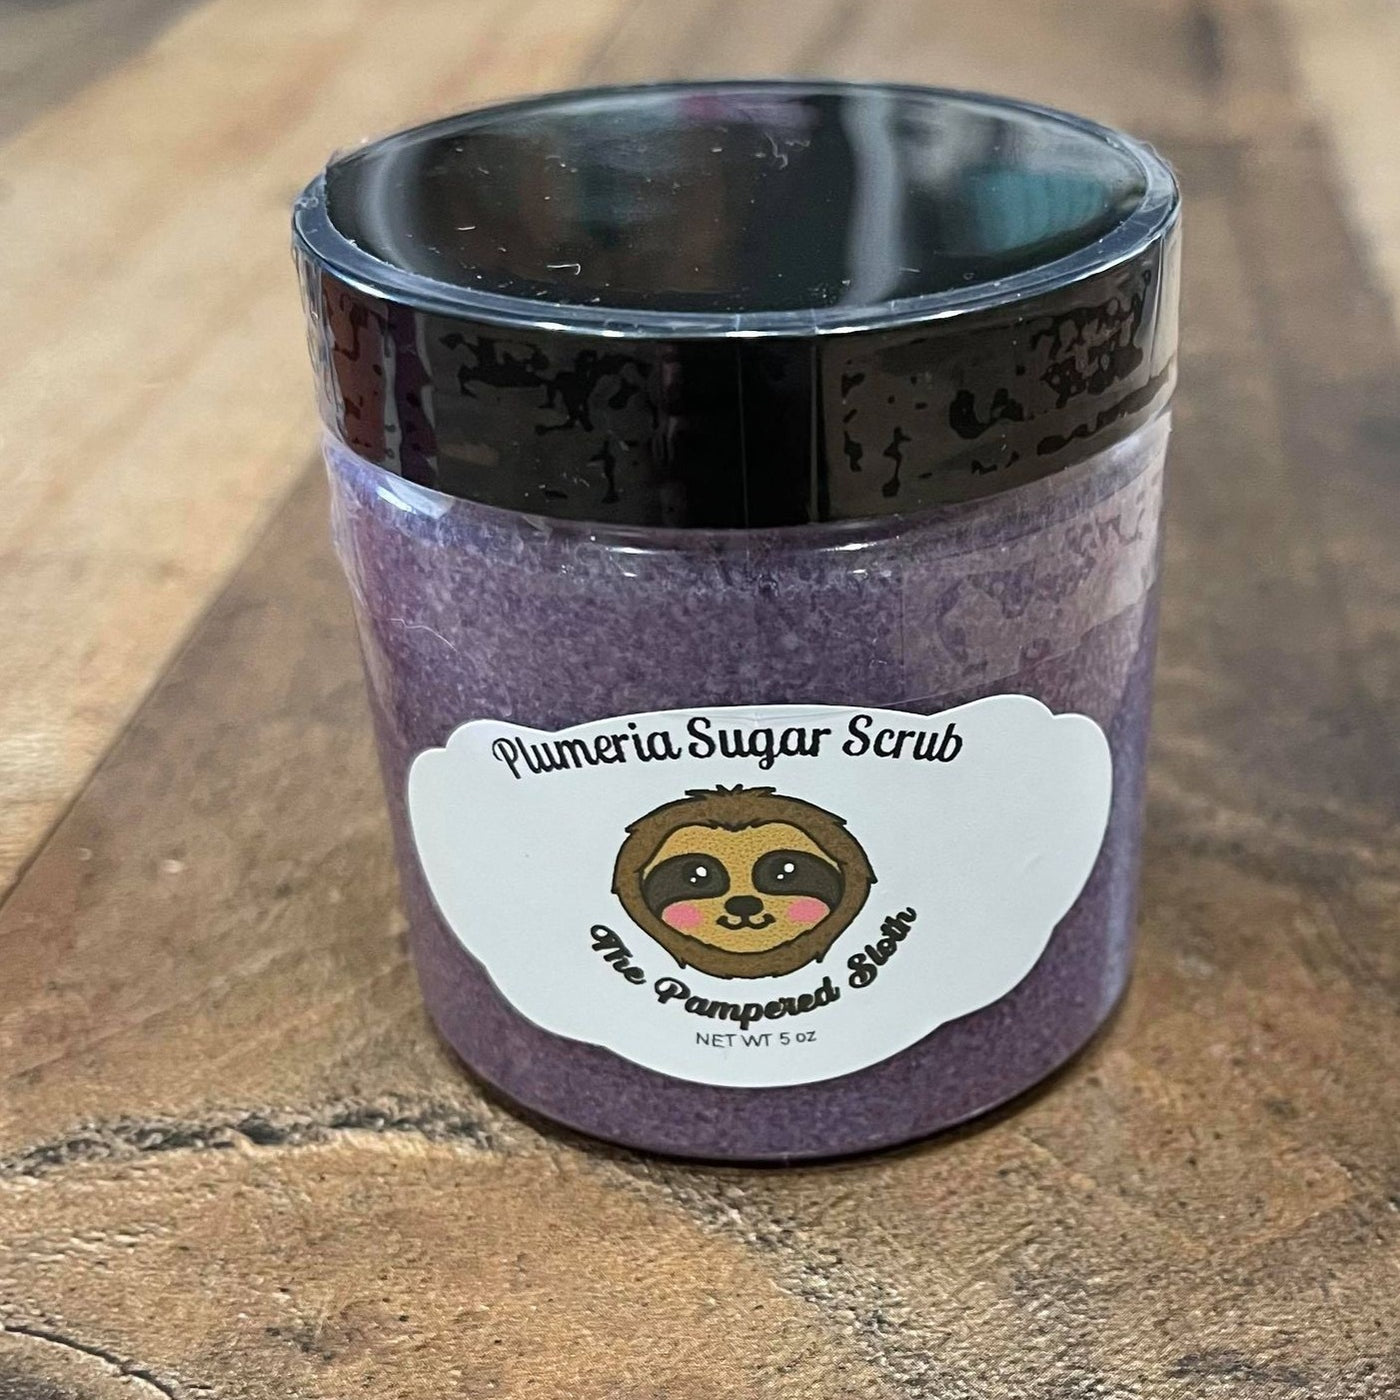 Pampered Sloth Sugar Scrub